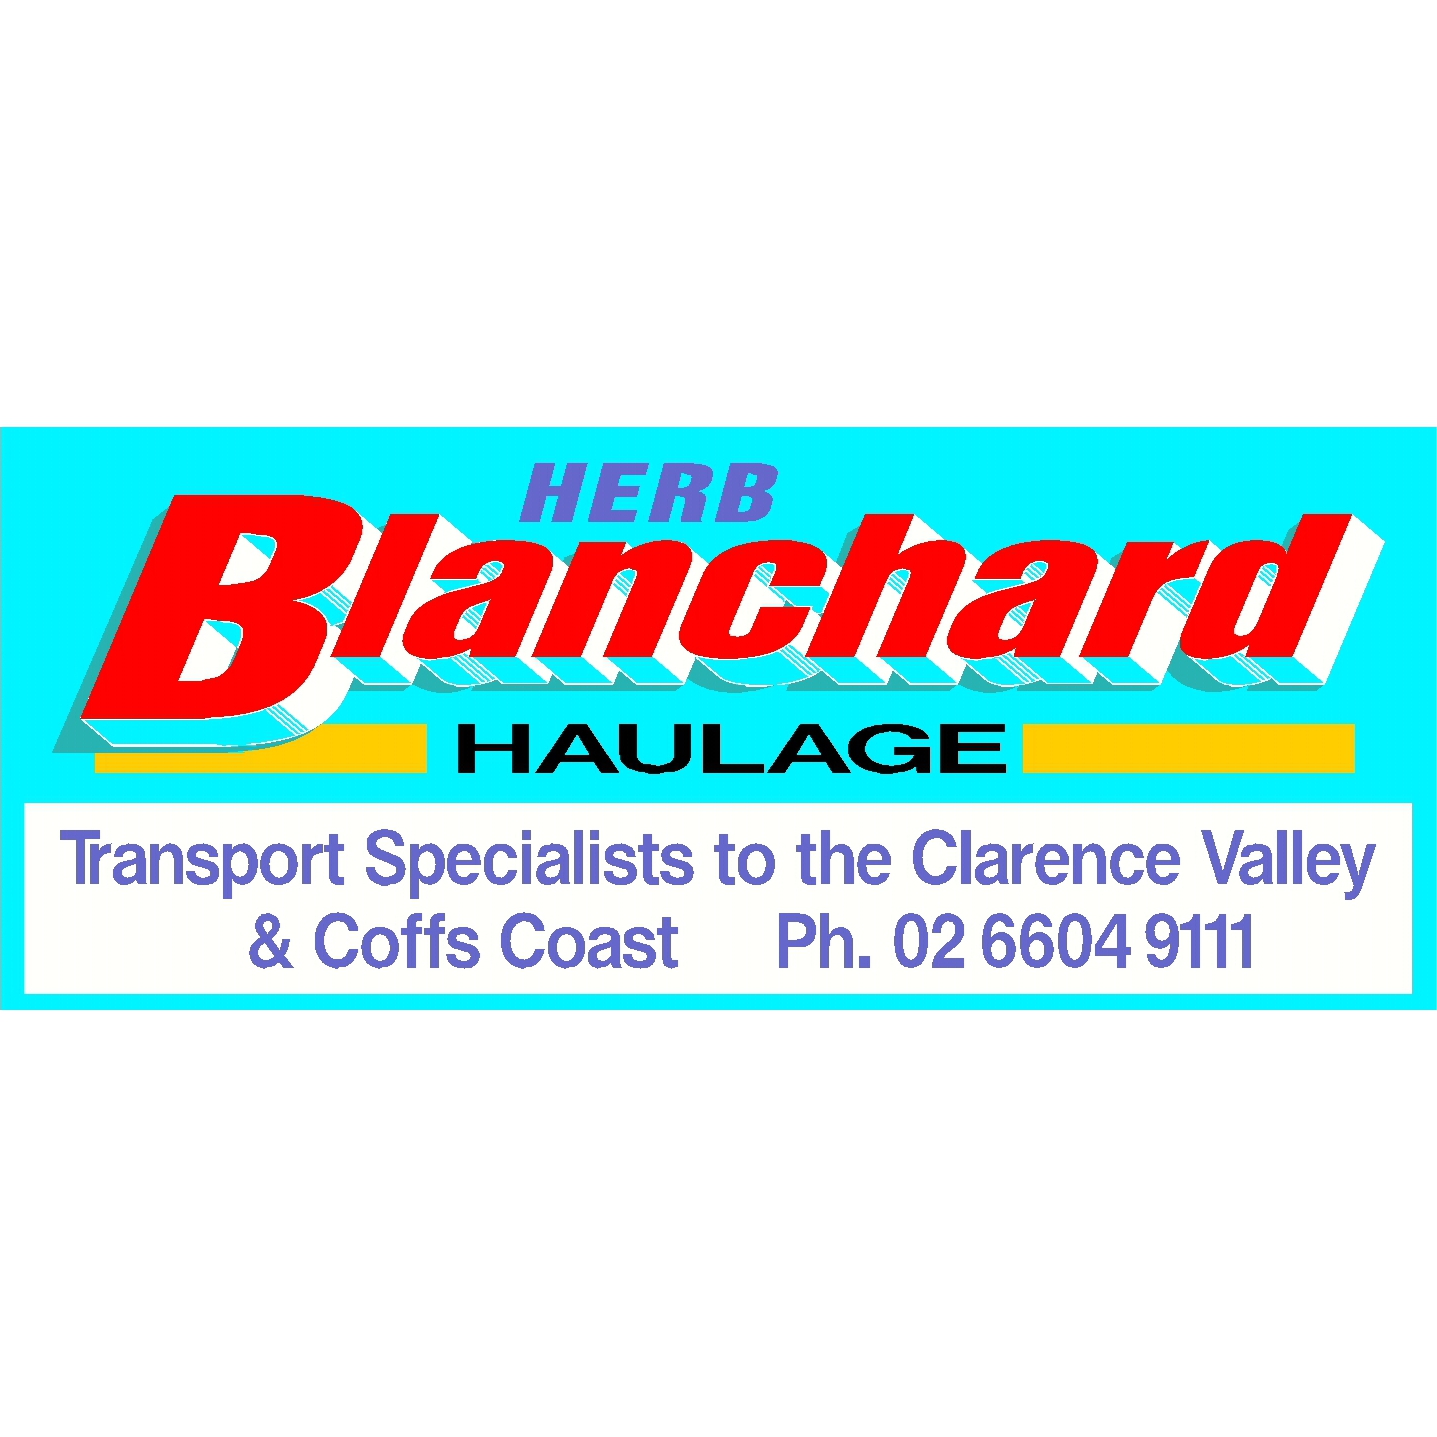 Blanchard, Herb Haulage - Grafton, NSW 2460 - (02) 6604 9111 | ShowMeLocal.com